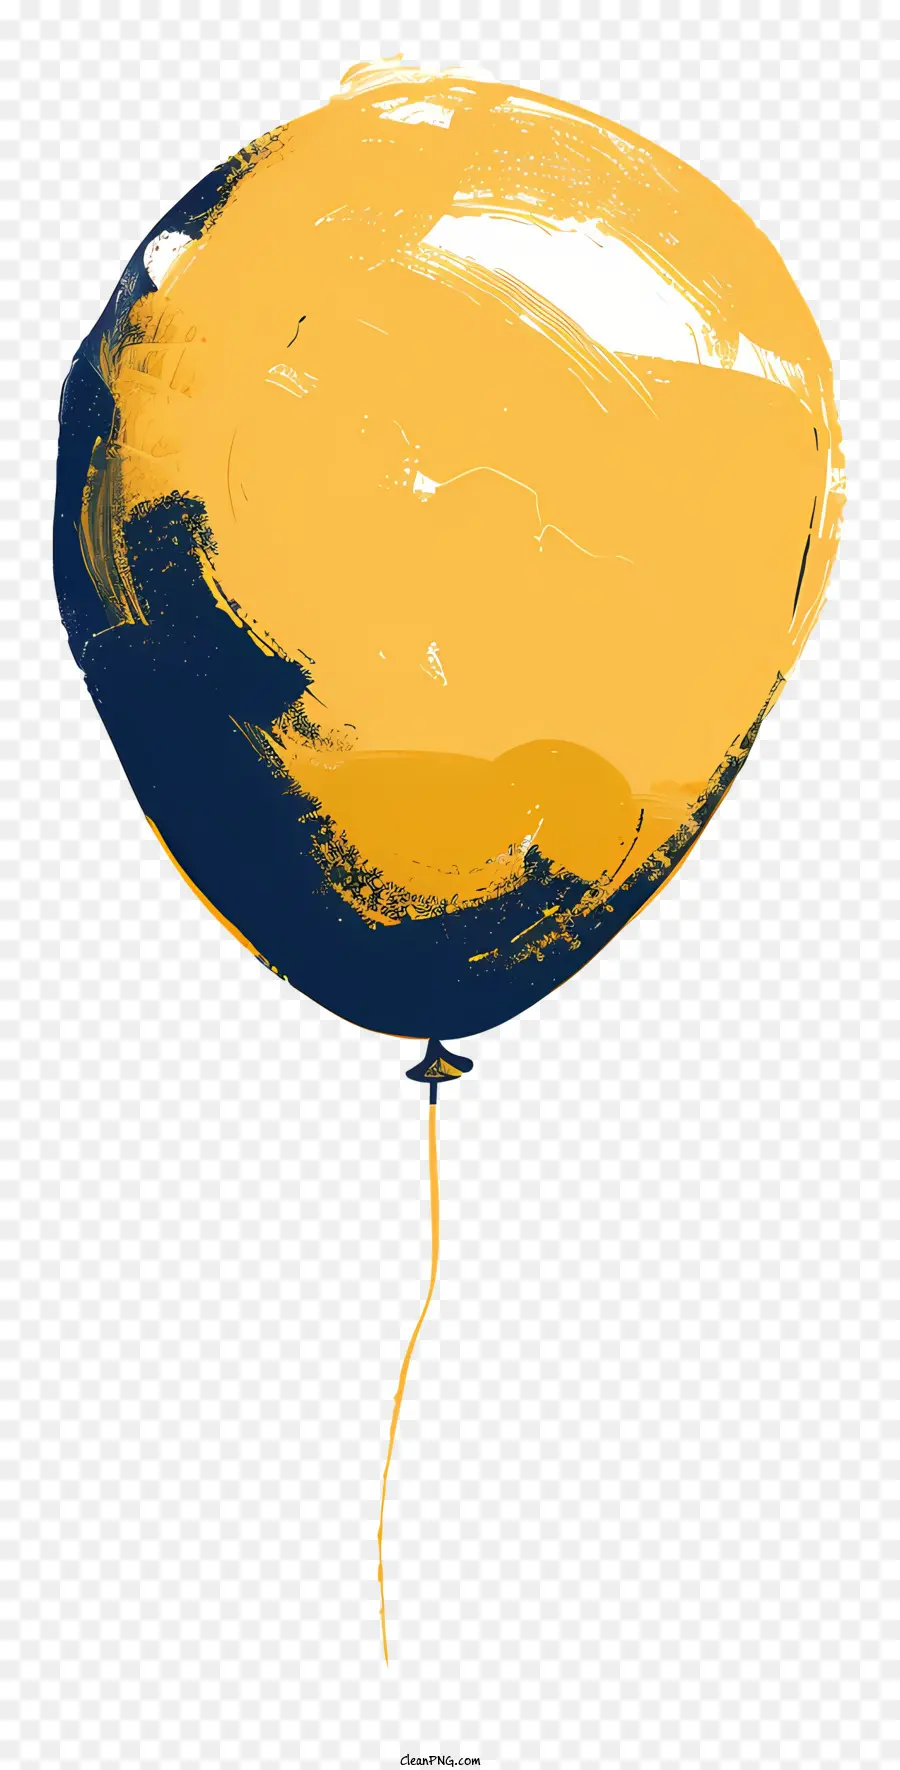 balloon yellow blue hole black background